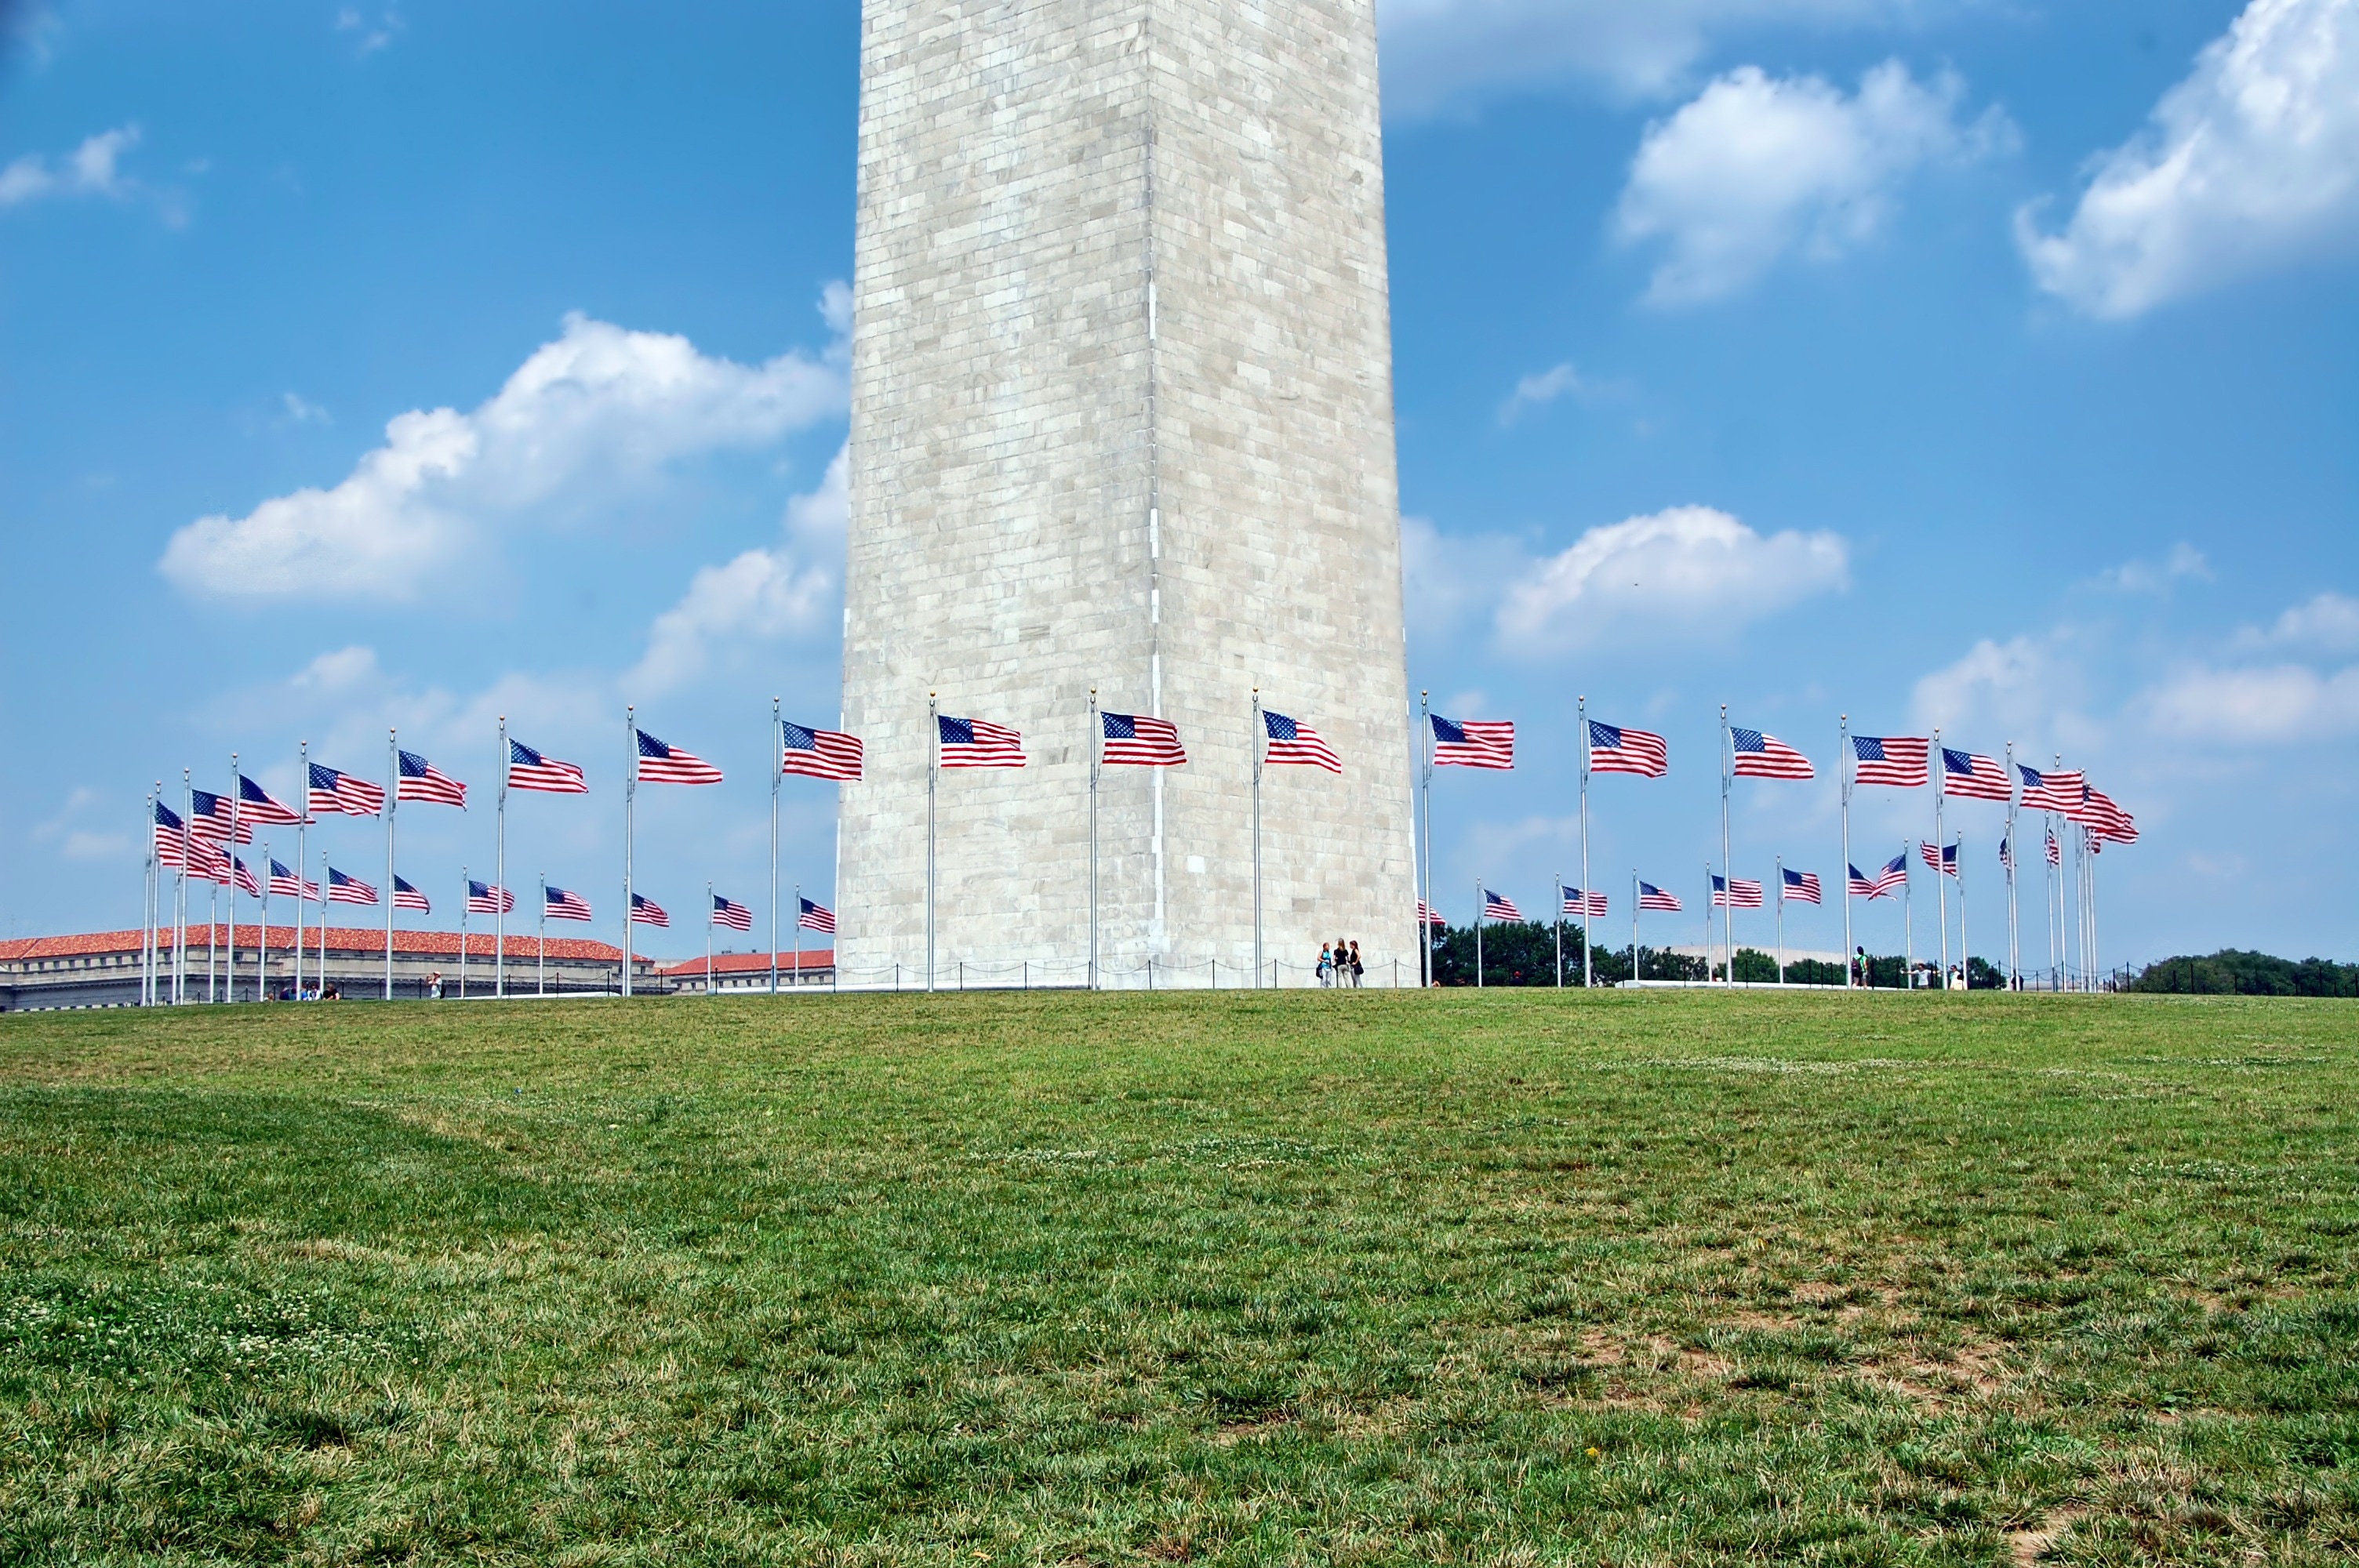 Washington D C, Washington Monument, grass, history